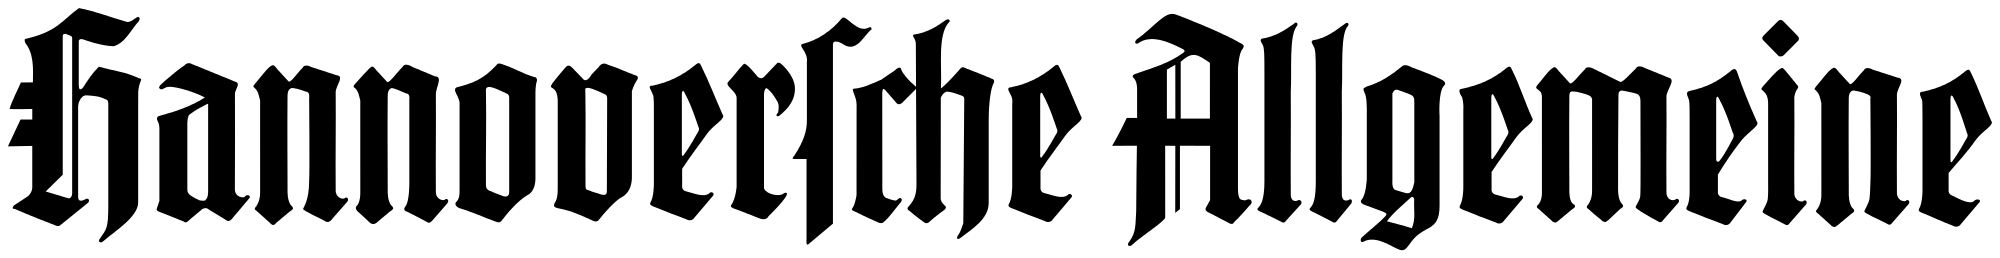 HAZ Logo